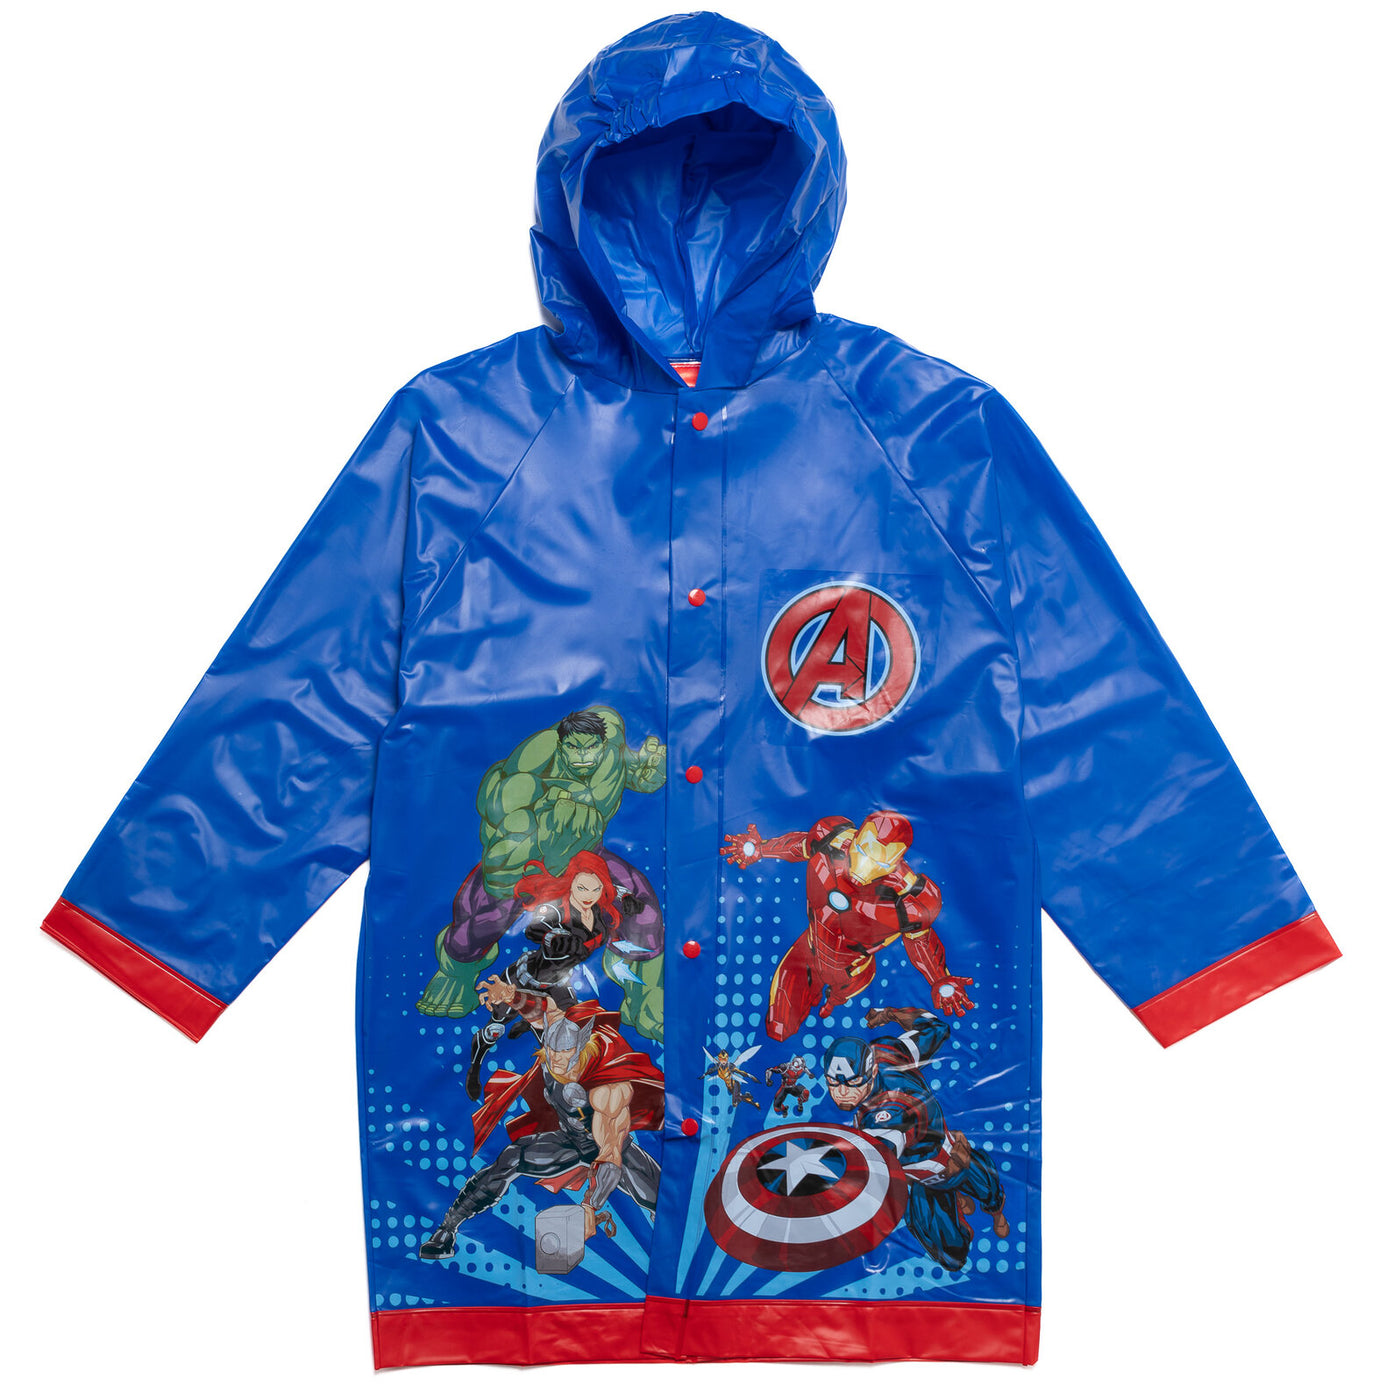 Marvel Avengers Waterproof Hooded Rain Jacket Coat